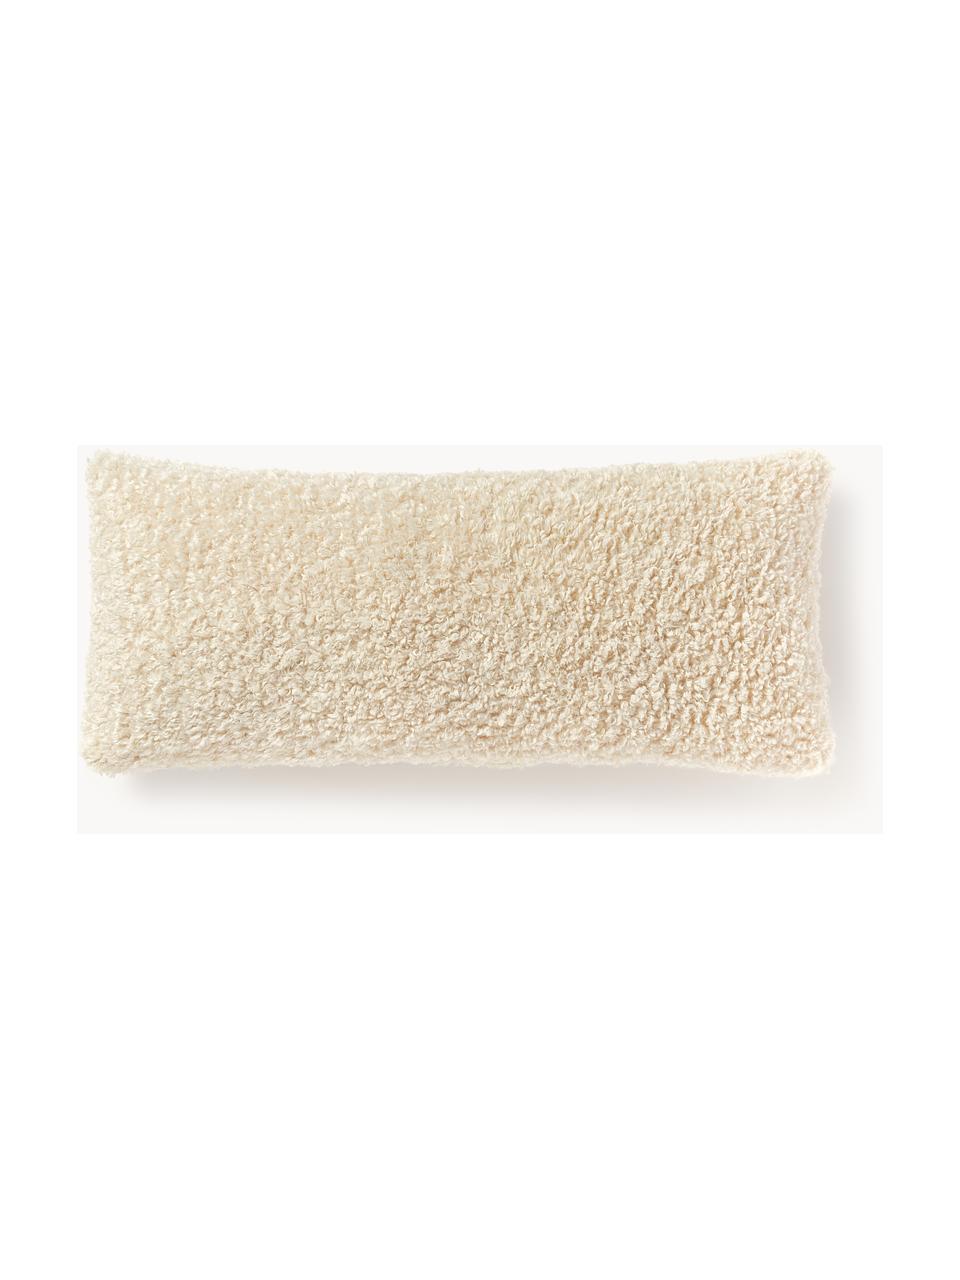 Teddy stoffen kussenhoes Dotty, Teddyvacht (100% polyester), Crèmewit, B 30 x L 70 cm